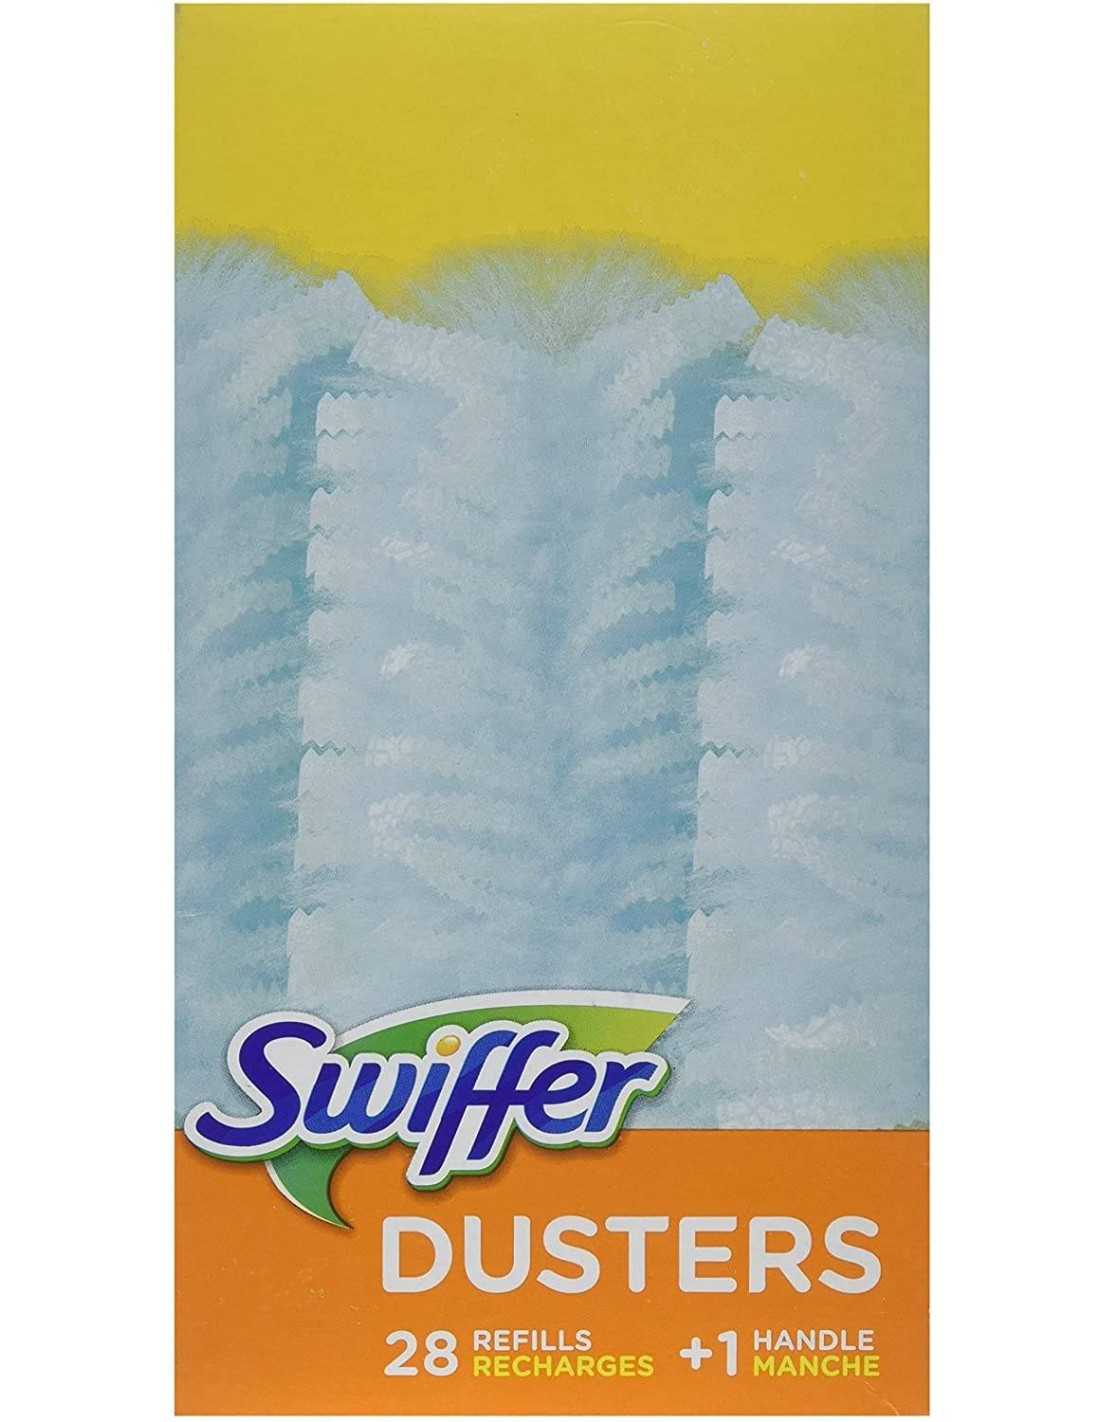 Swiffer - Kit de limpieza de plumeros, 1 mango y 24 recambios de Swiffer de  plumero, 80202999